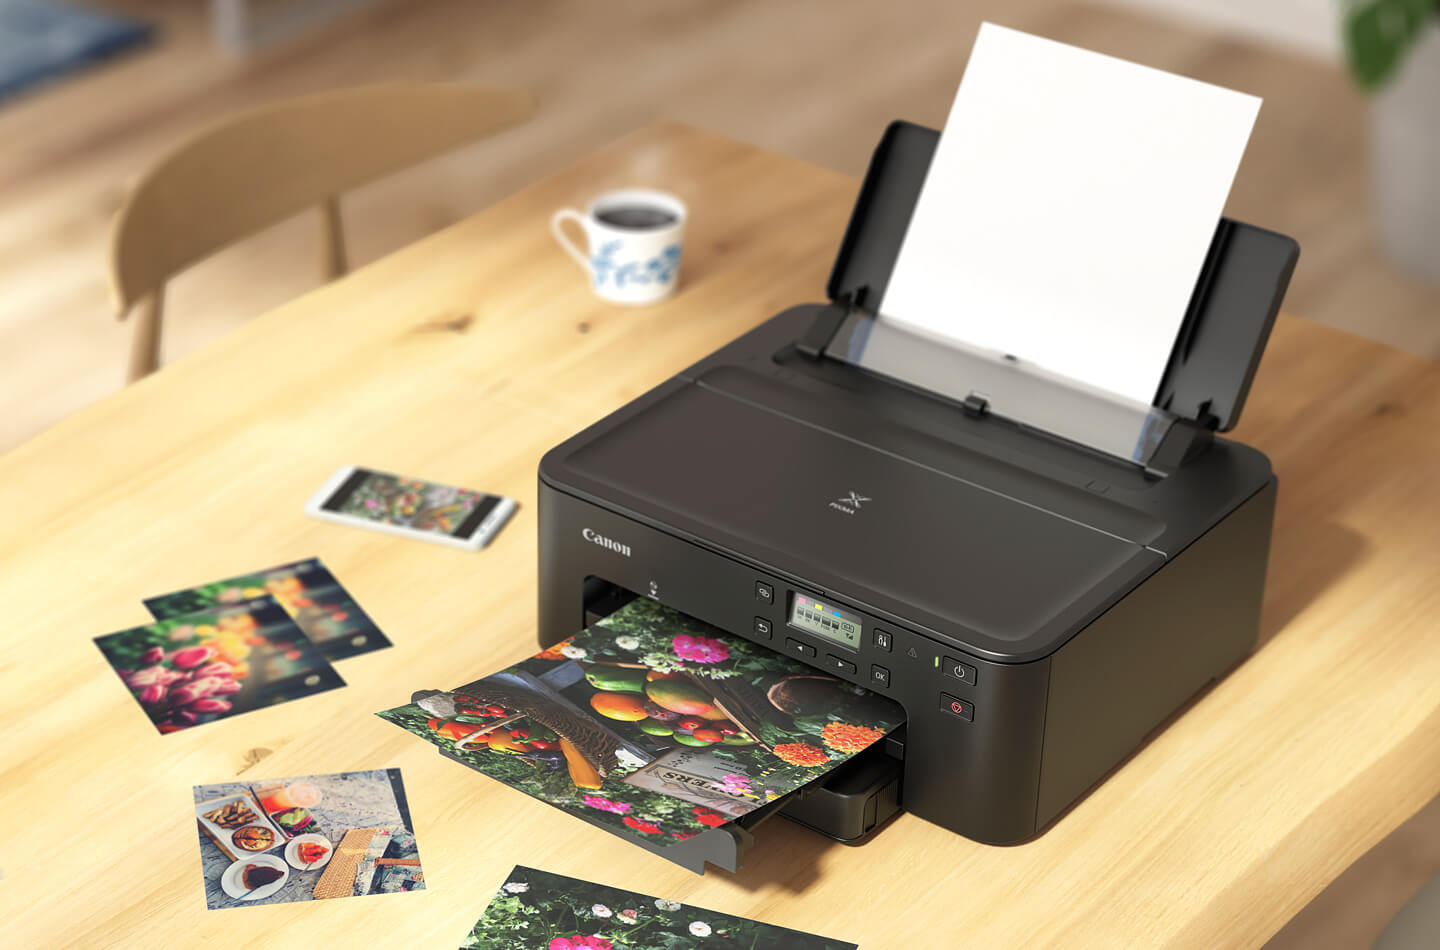 Amerikaans voetbal Afspraak Premisse Canon PIXMA TS705 printer met 5 afzonderlijke inktcartridges | LetsGoDigital